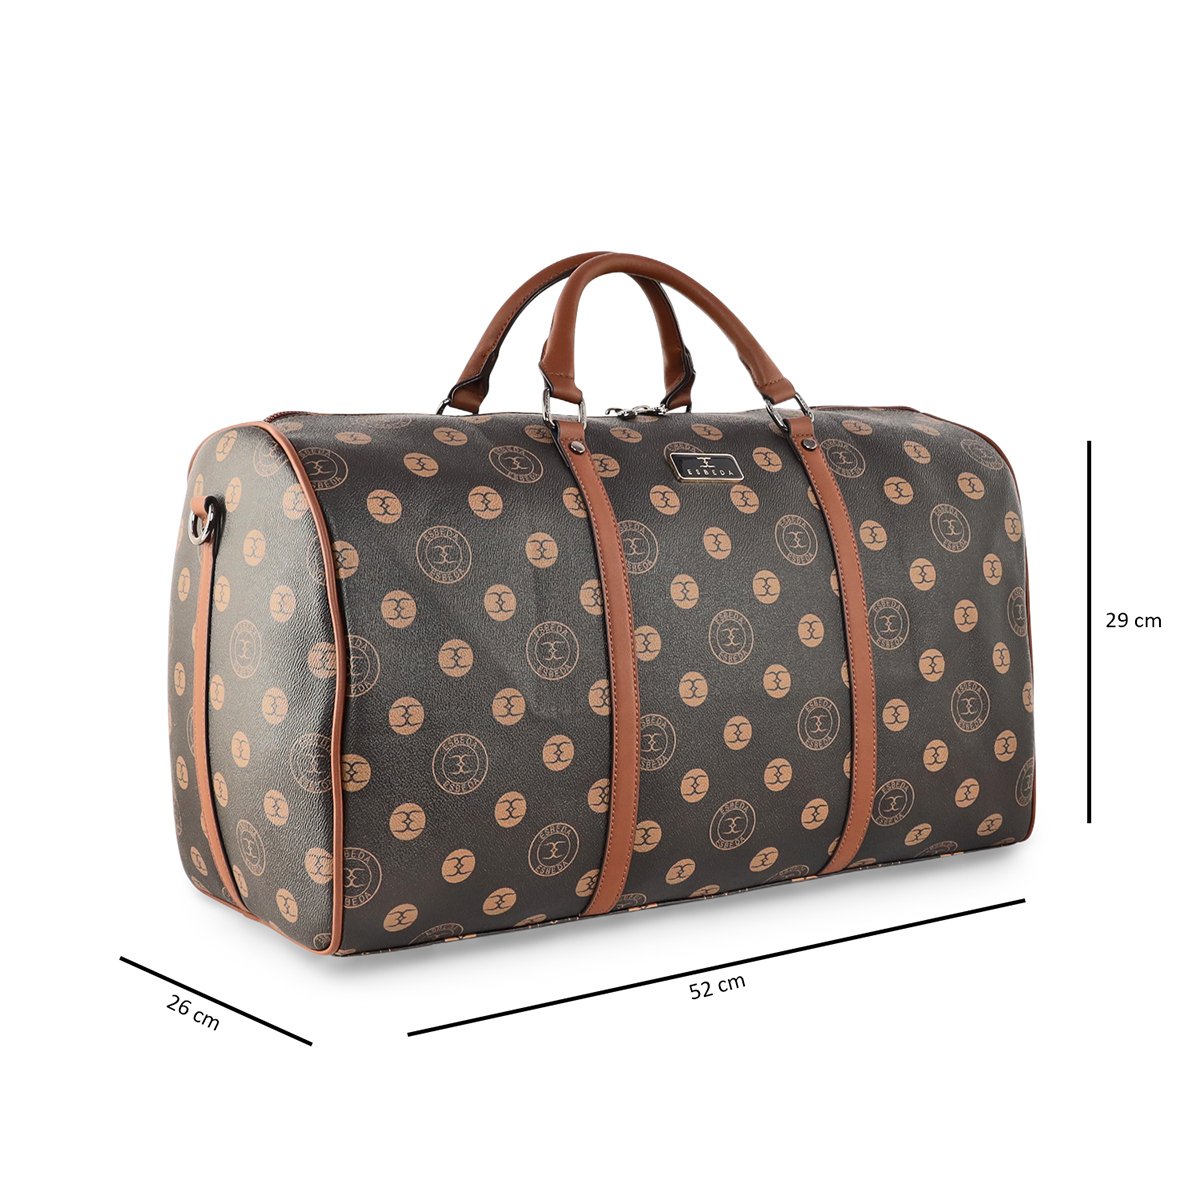 Handbags | Esbeda Travel Bag Pure Leather | Freeup